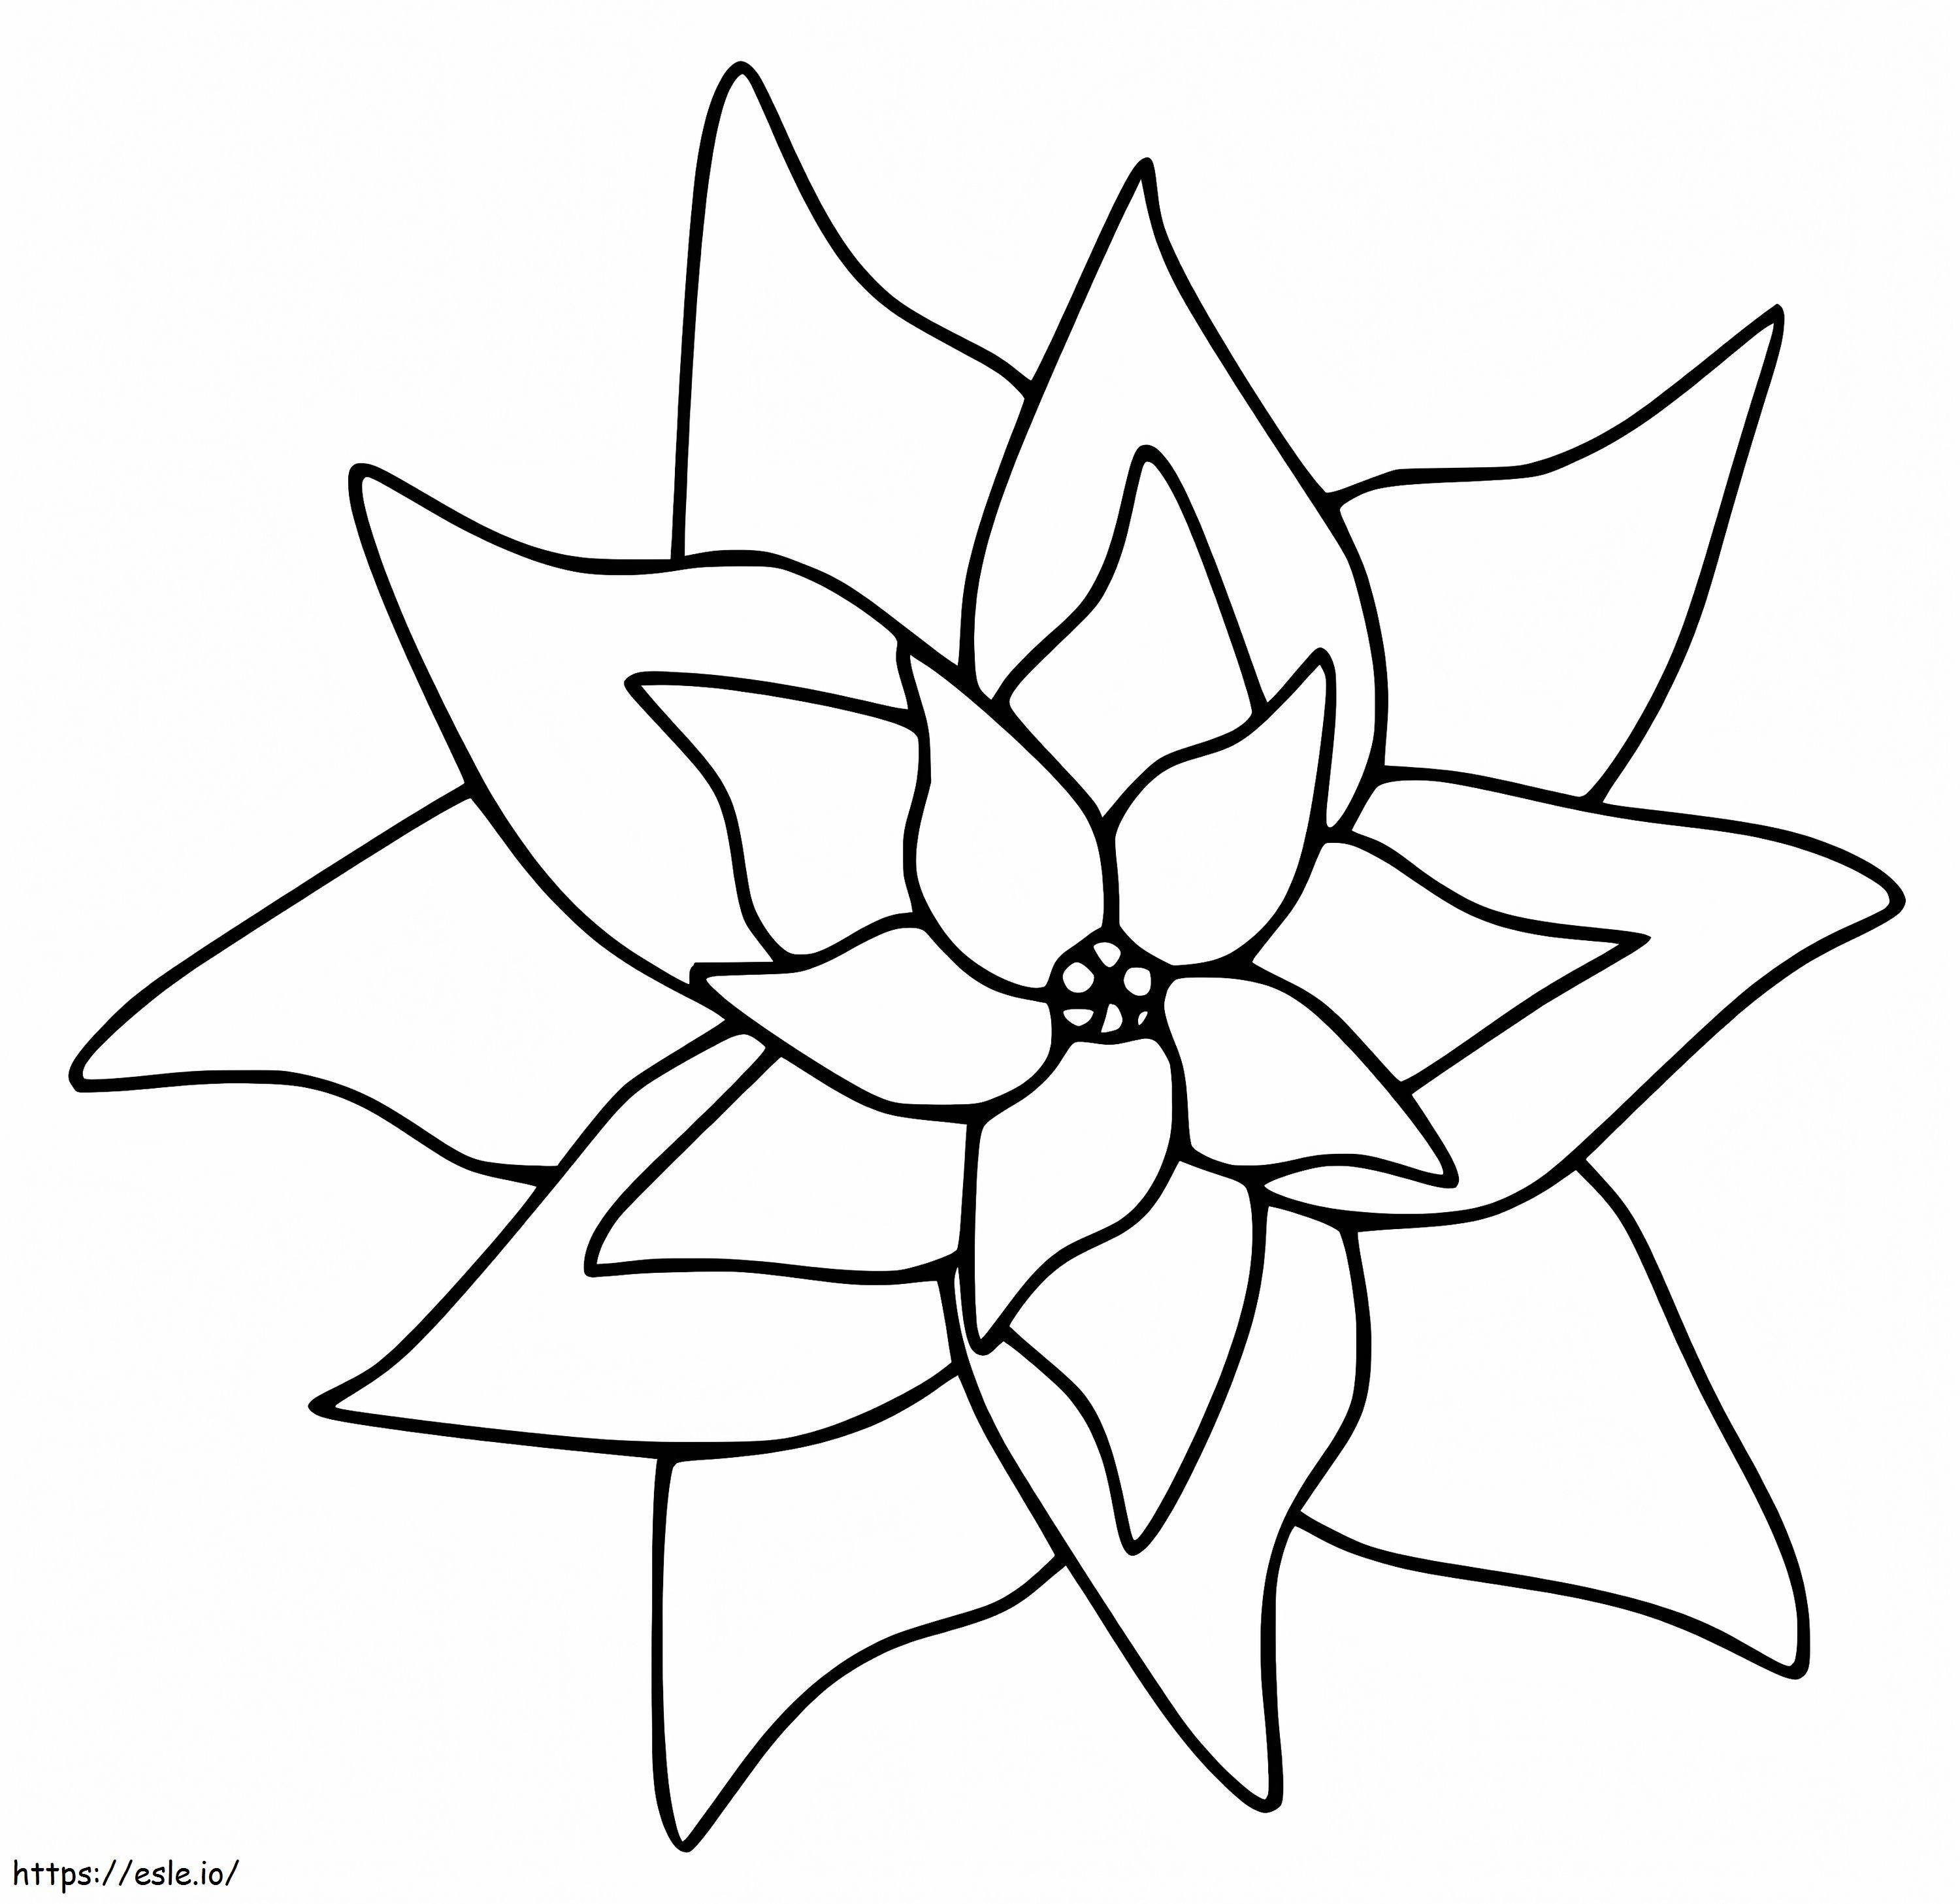 Coloriage Poinsettia facile à imprimer dessin